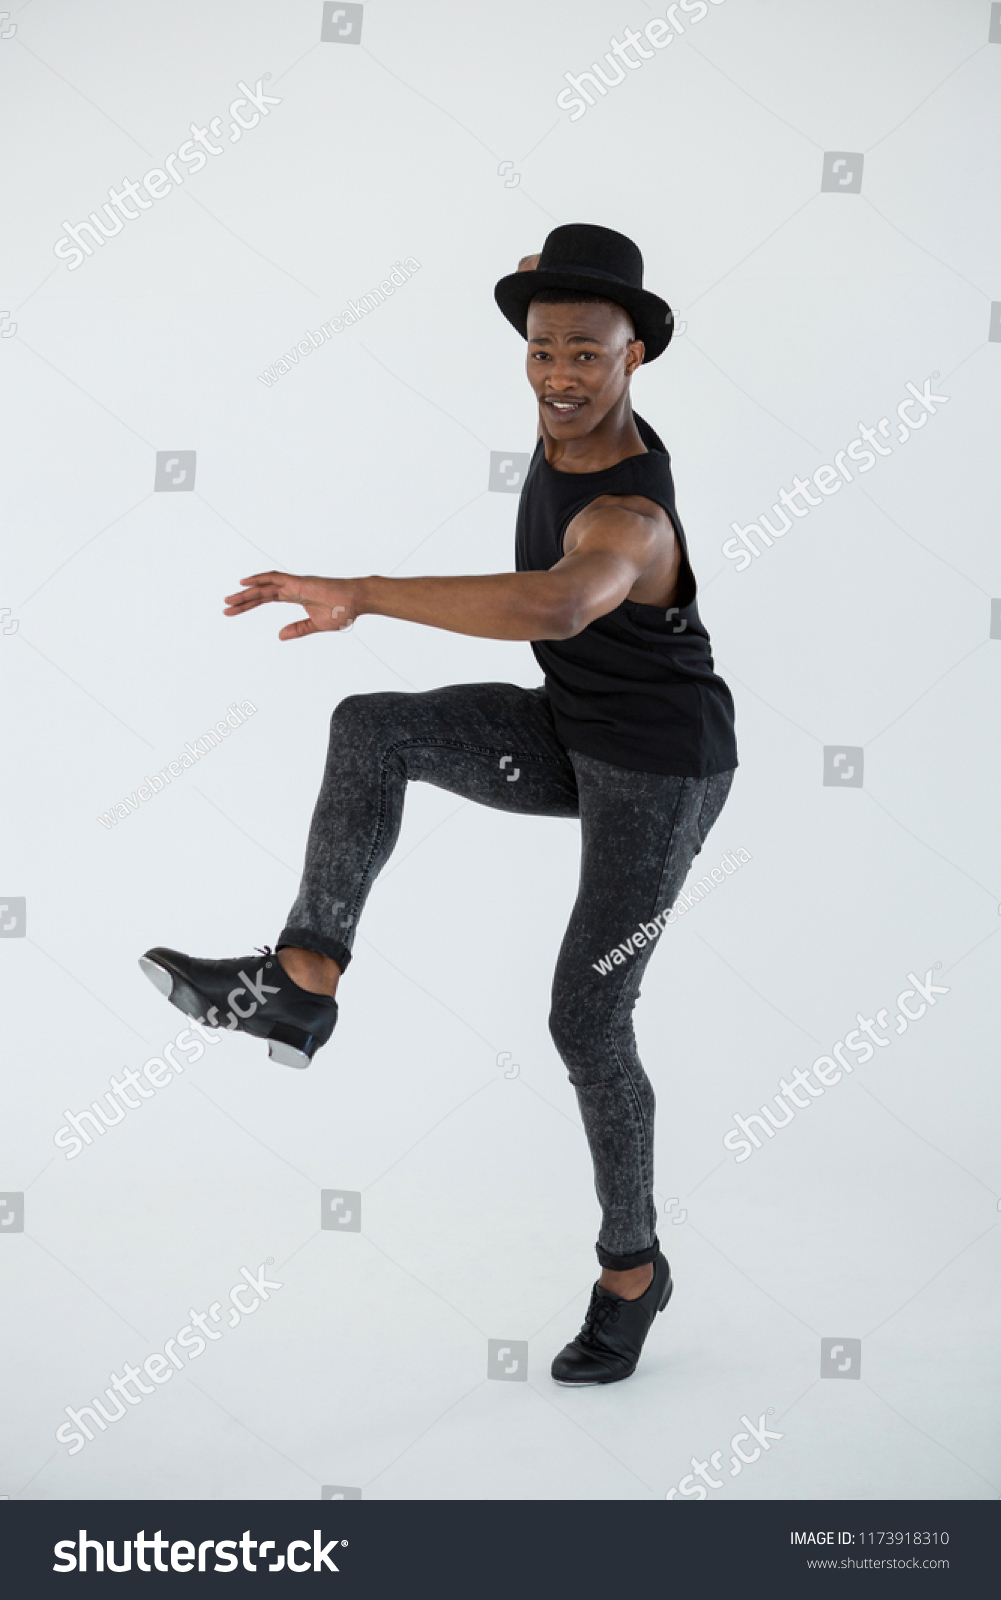 Professional tap dancer Images, Stock Photos & Vectors | Shutterstock